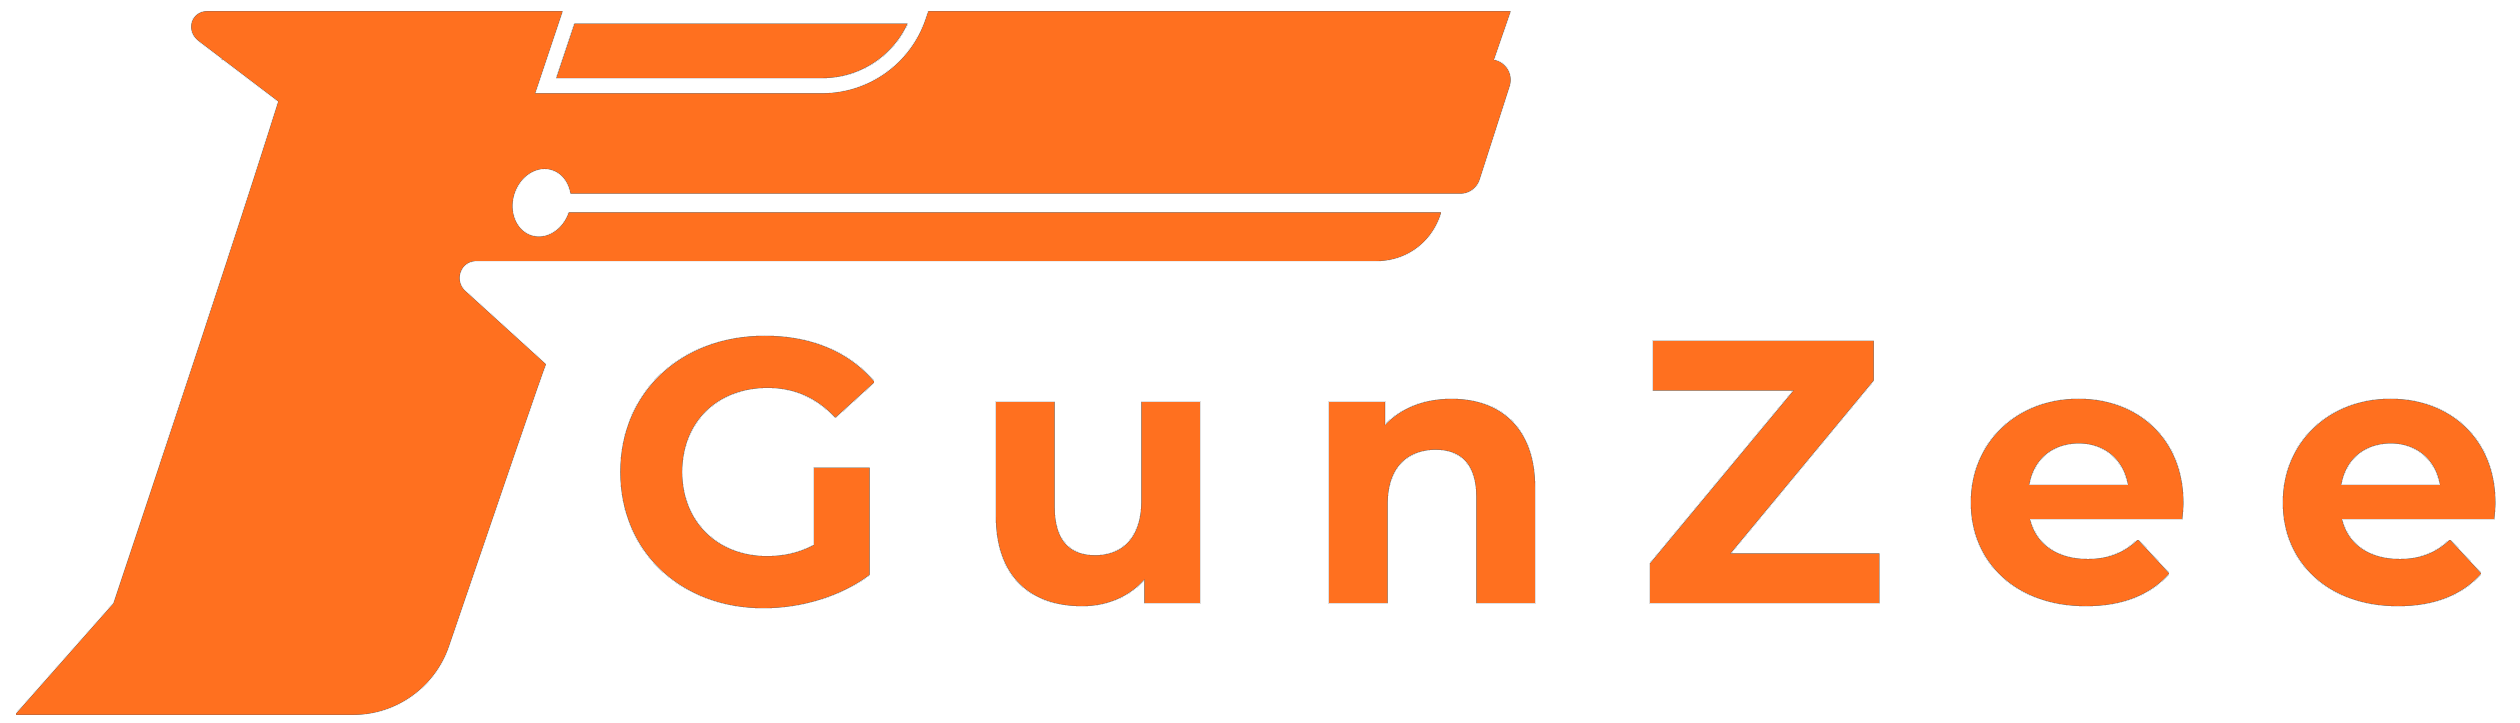 GunZee logo